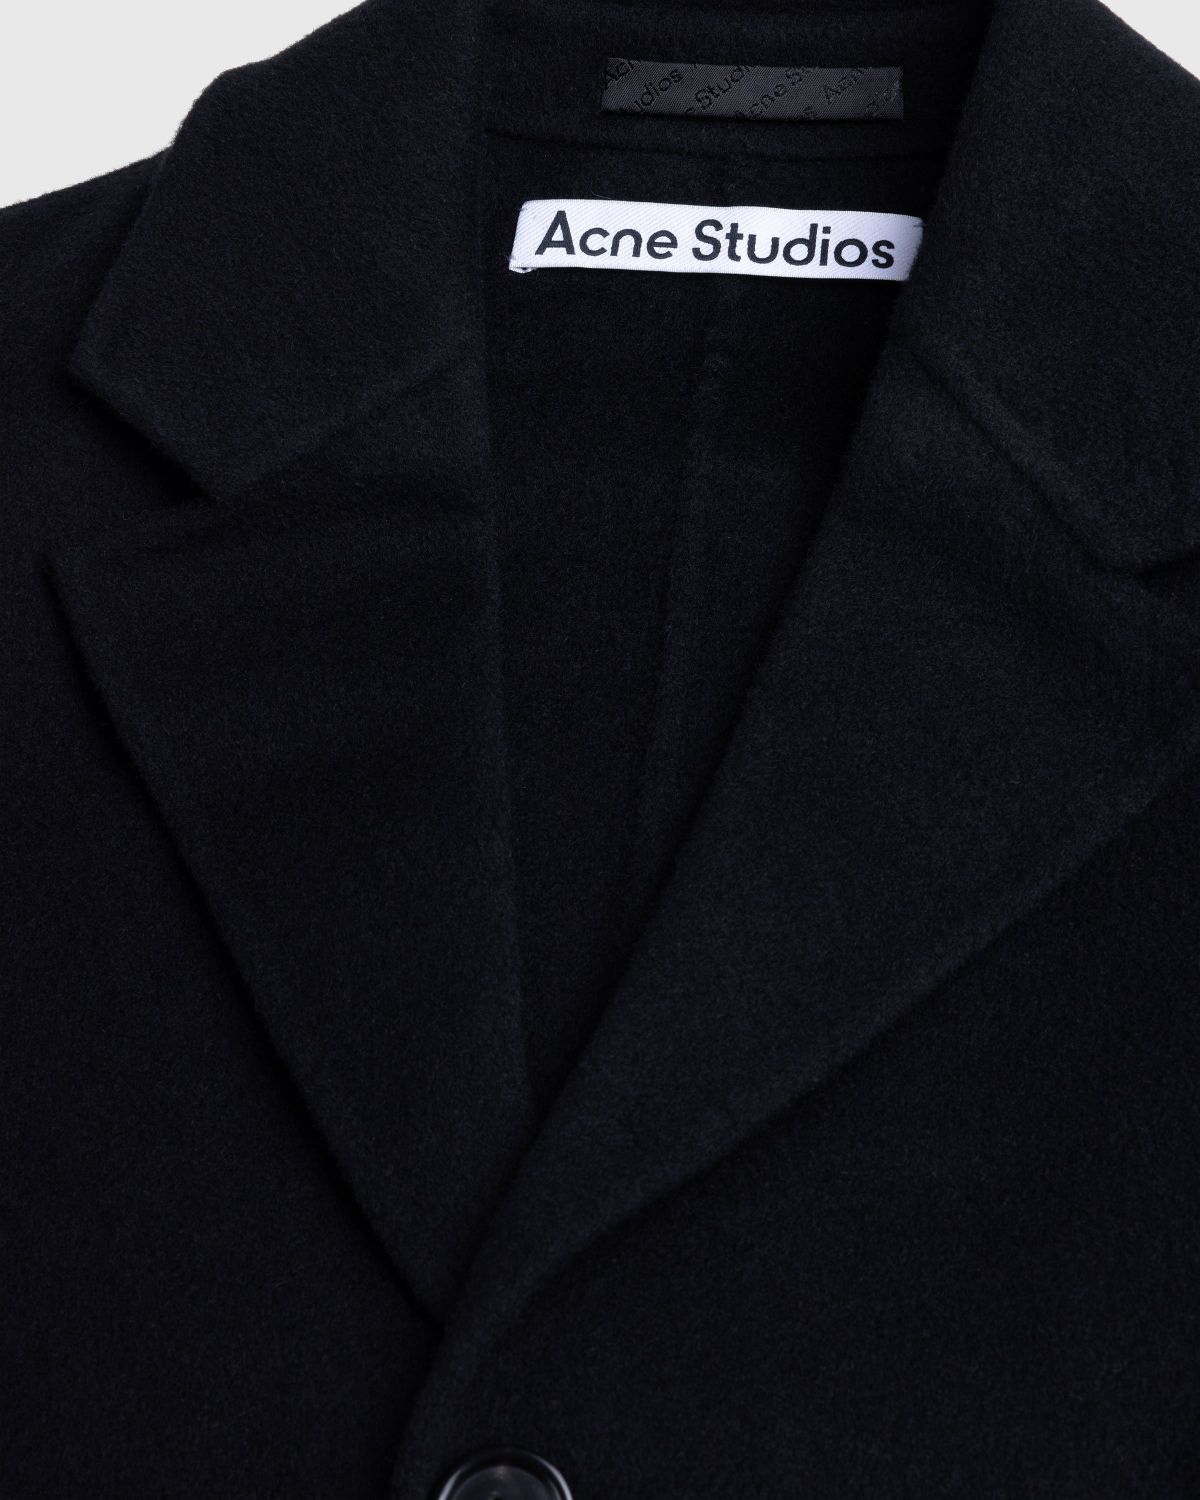 Acne Studios – Single-Breasted Coat Black - Trench Coats - Black - Image 6